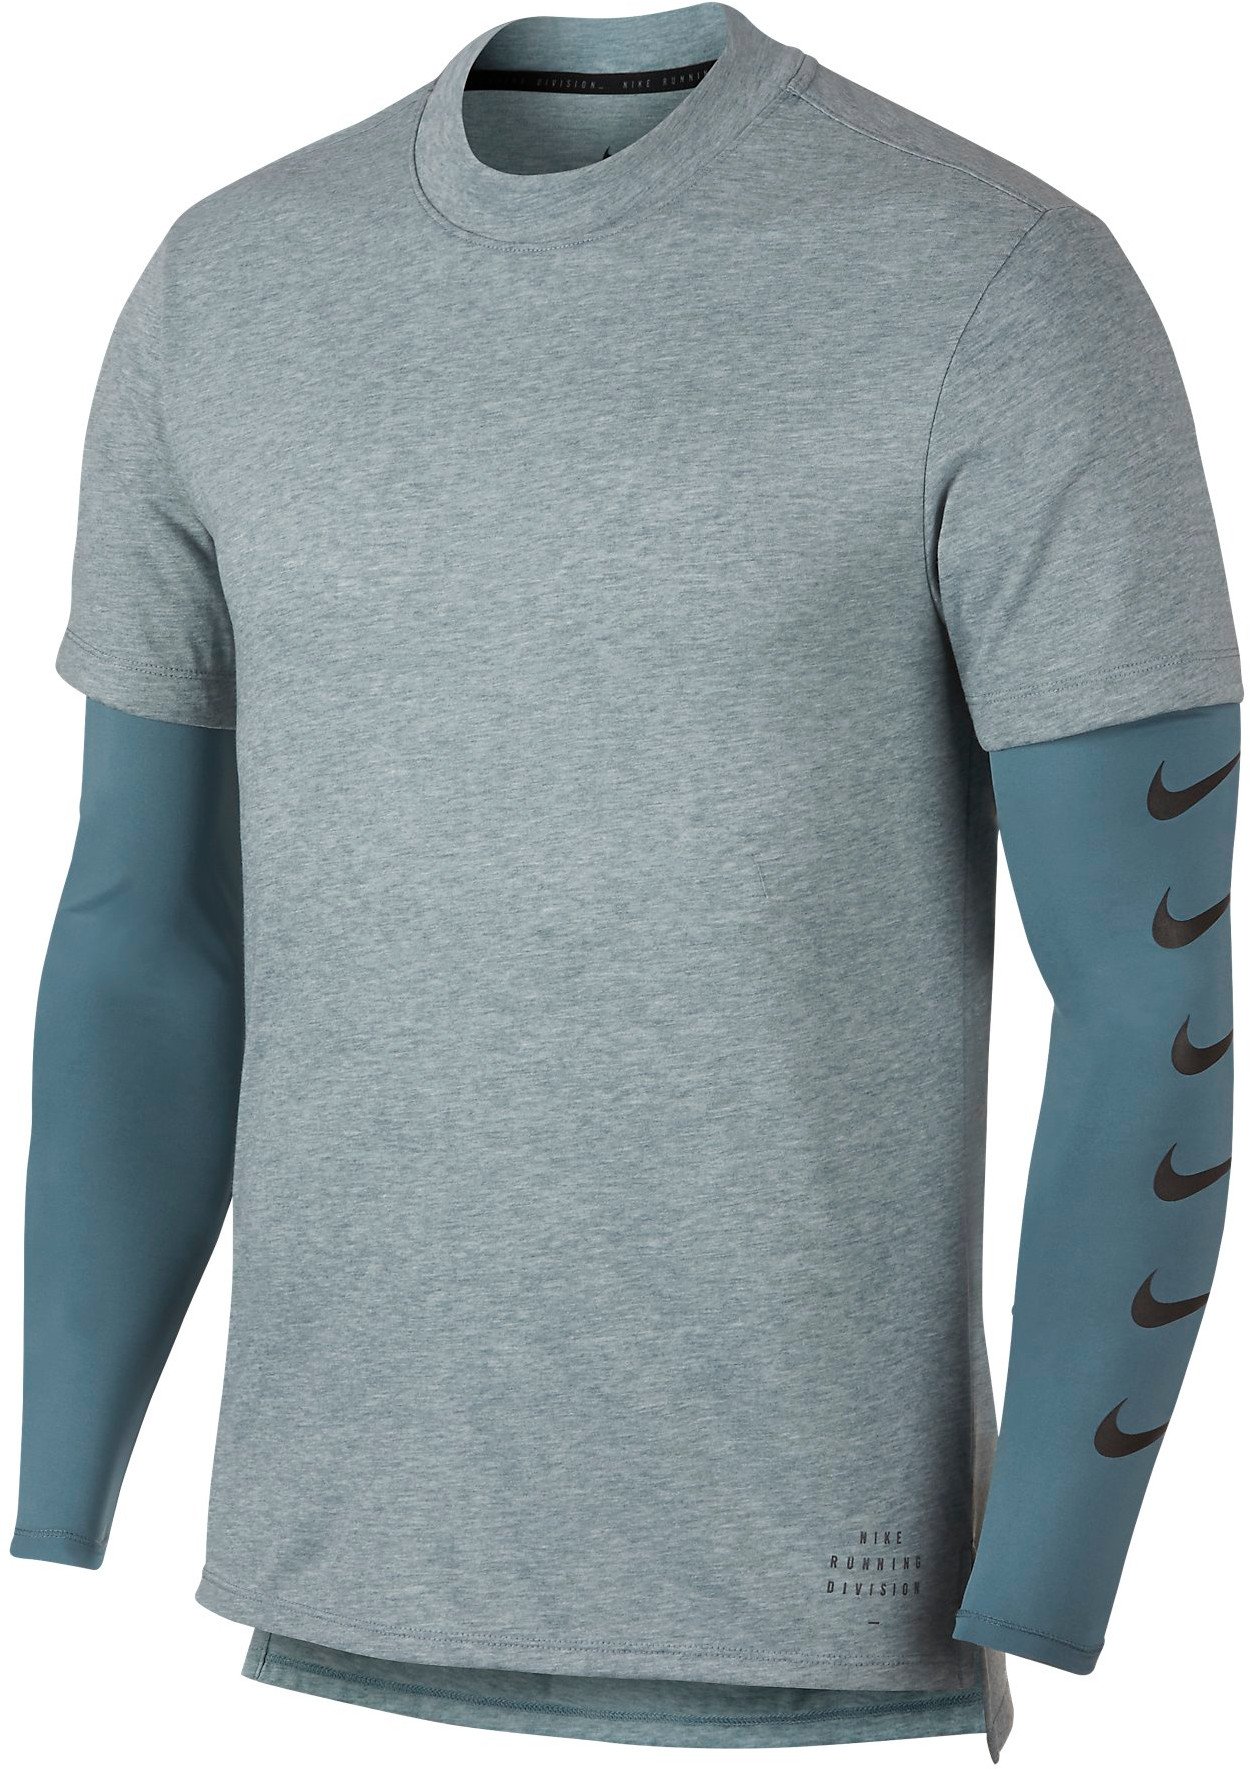 Pánské triko s dlouhým rukávem Nike Run Division Rise 365